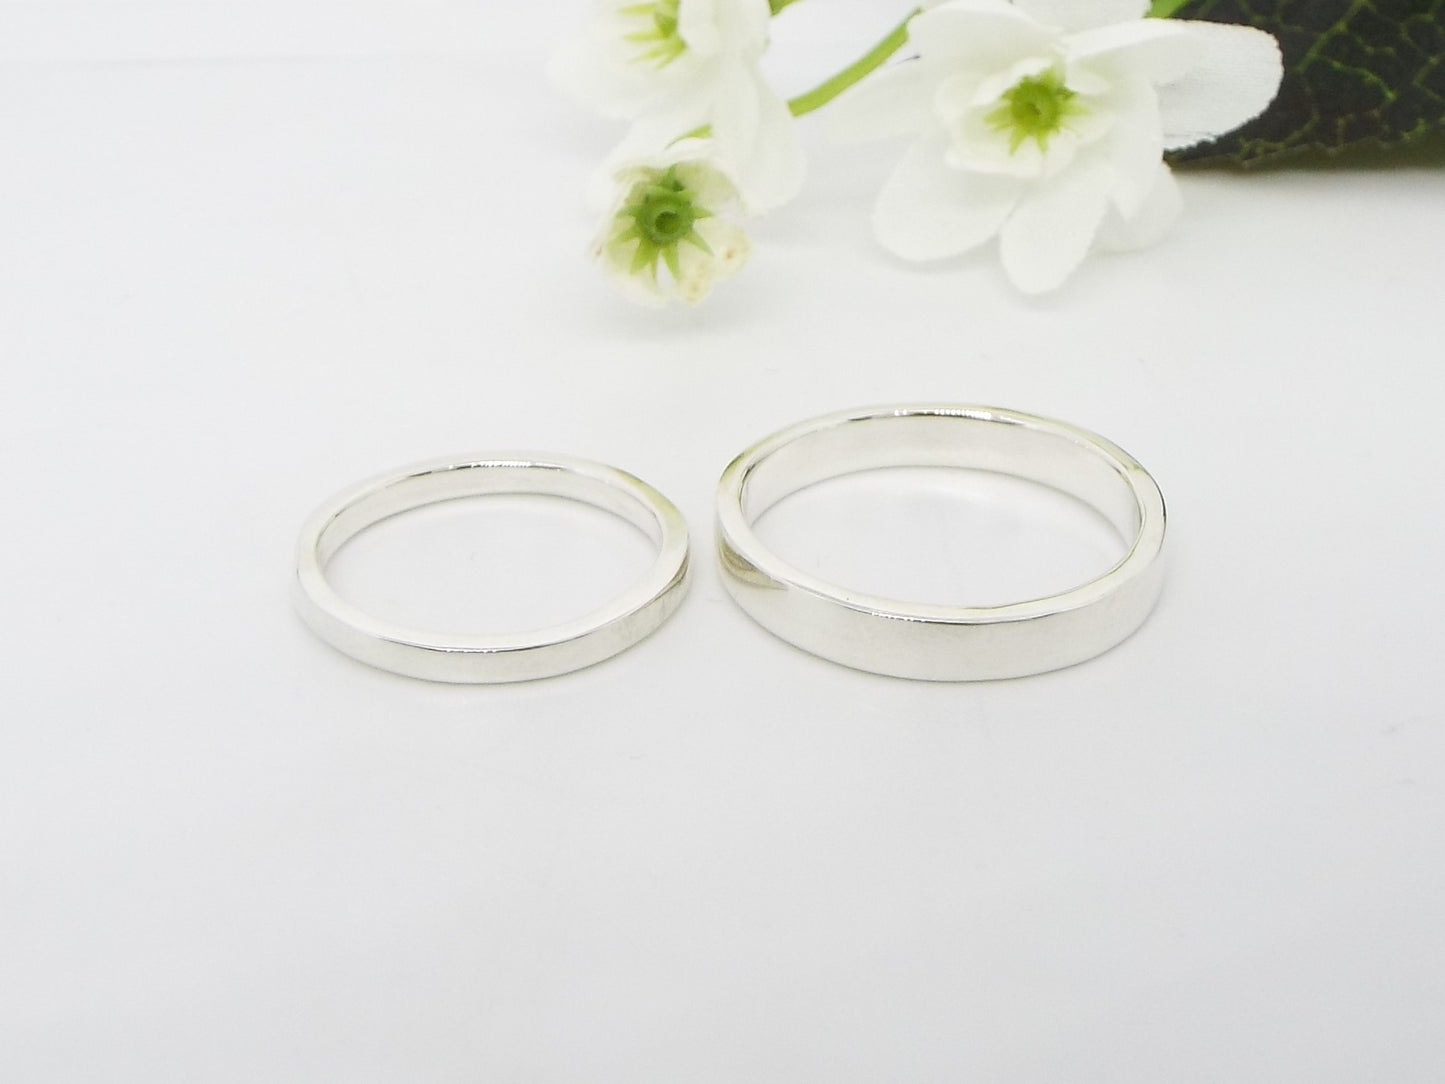 Silver Ring Set Flat profile - smooth polished finish new